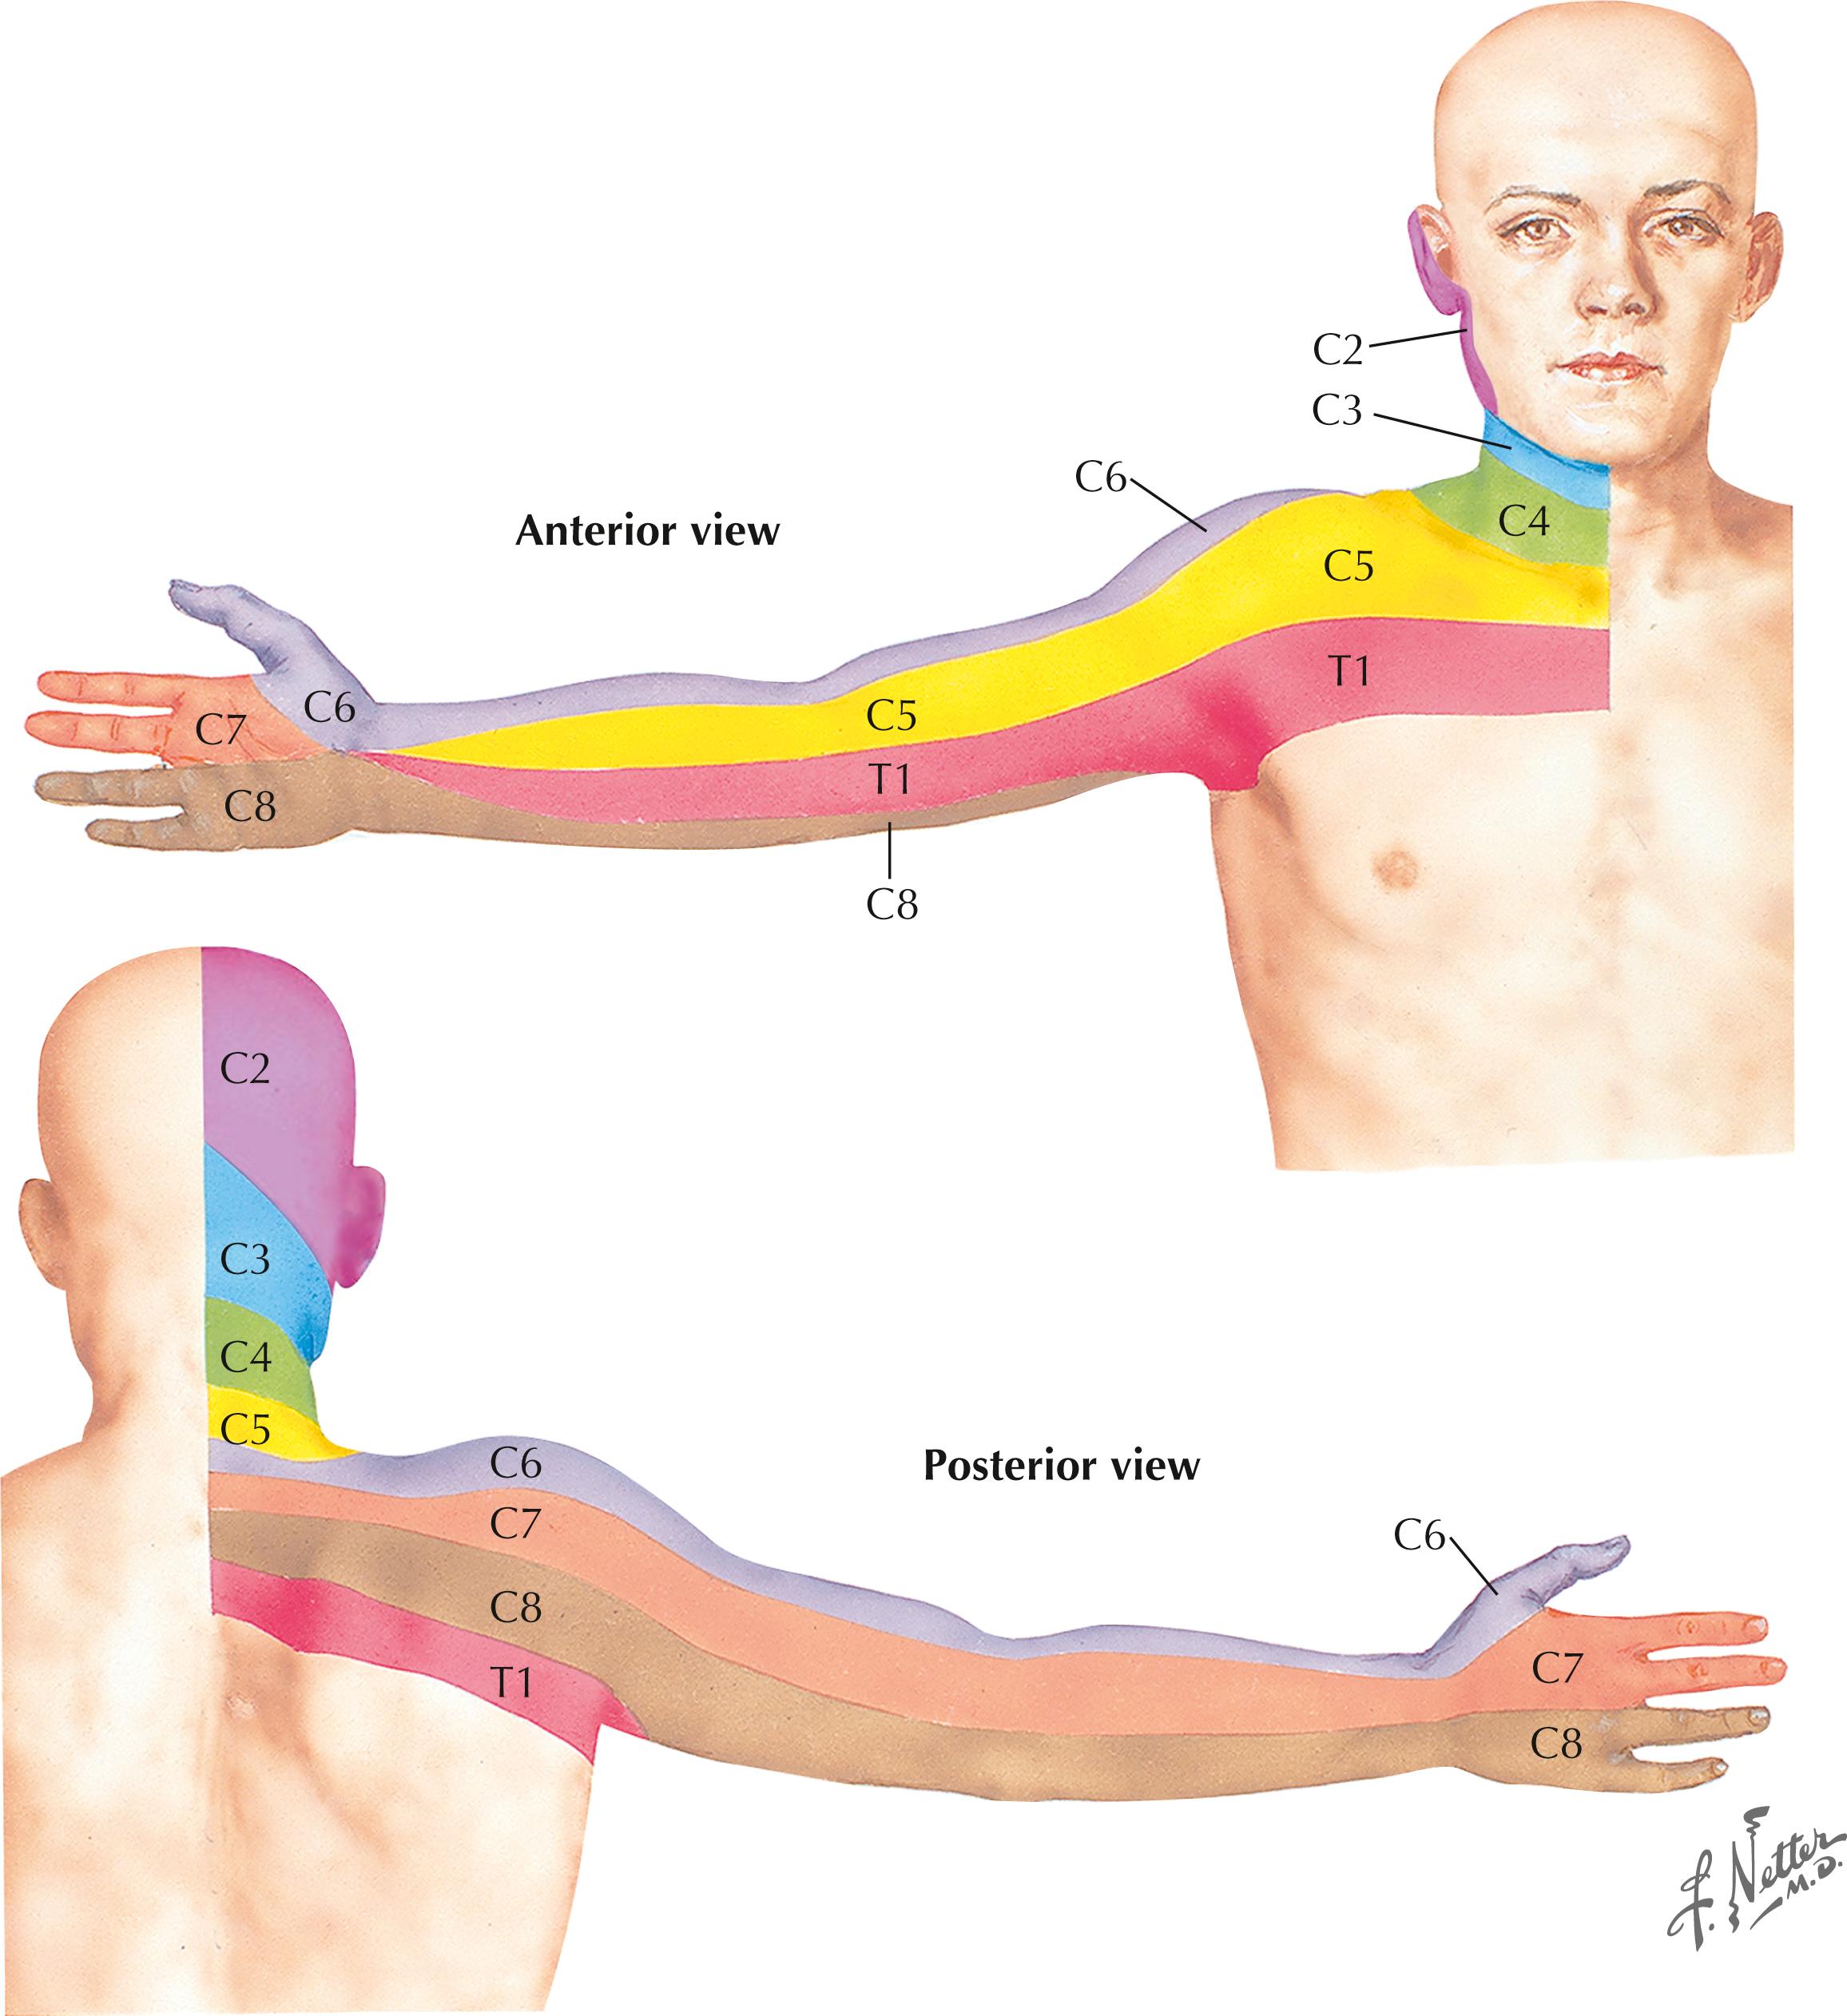 Figure 3-14, Dermatomes of the upper limb.